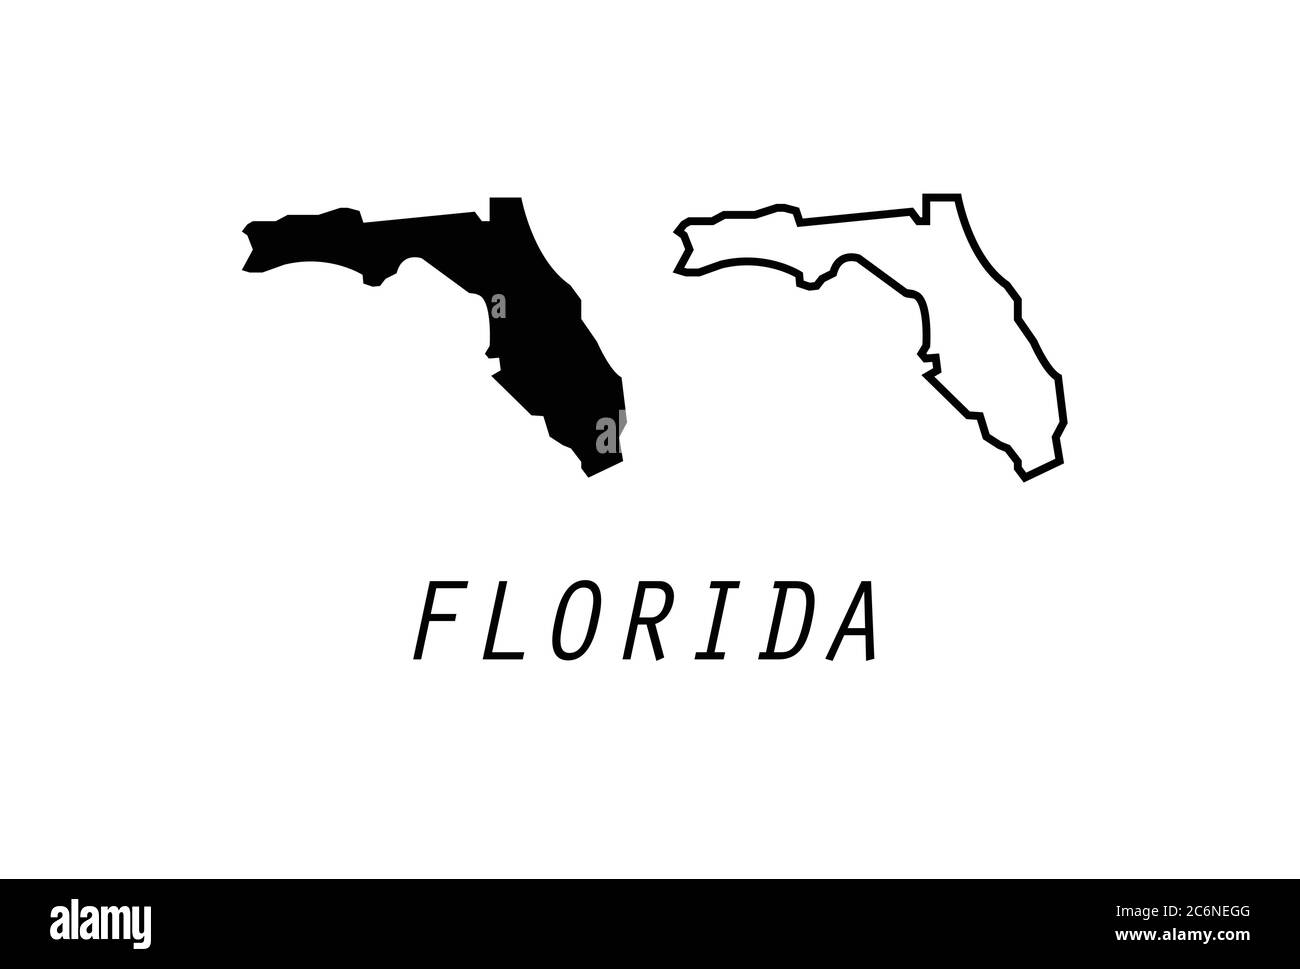 florida-map-outline-u-s-state-vector-illustration-stock-vector-image